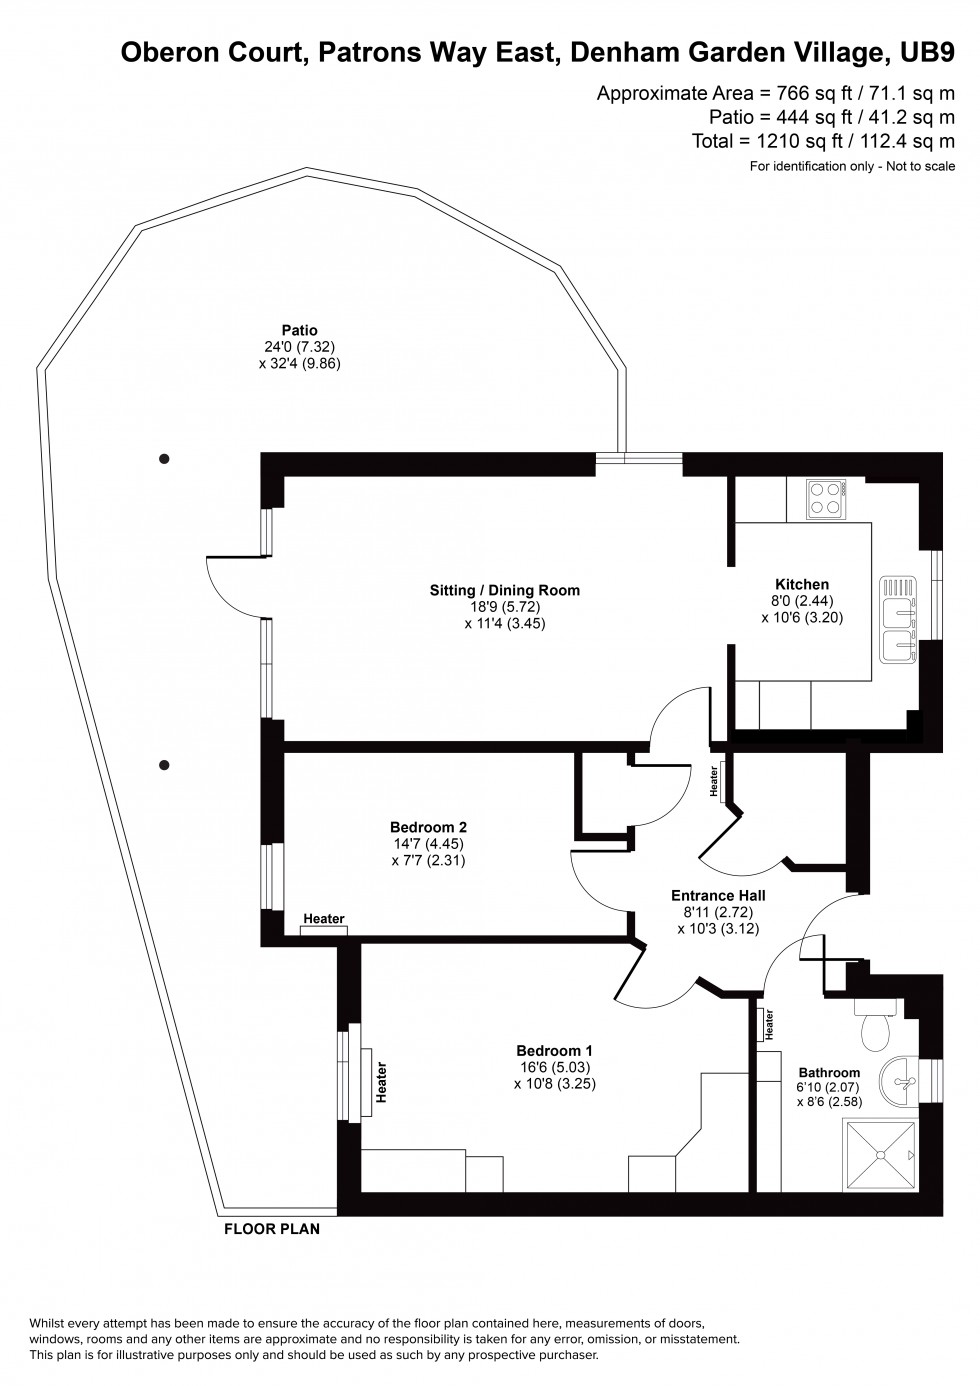 Floorplan for Denham Garden Village, Denham, UB9